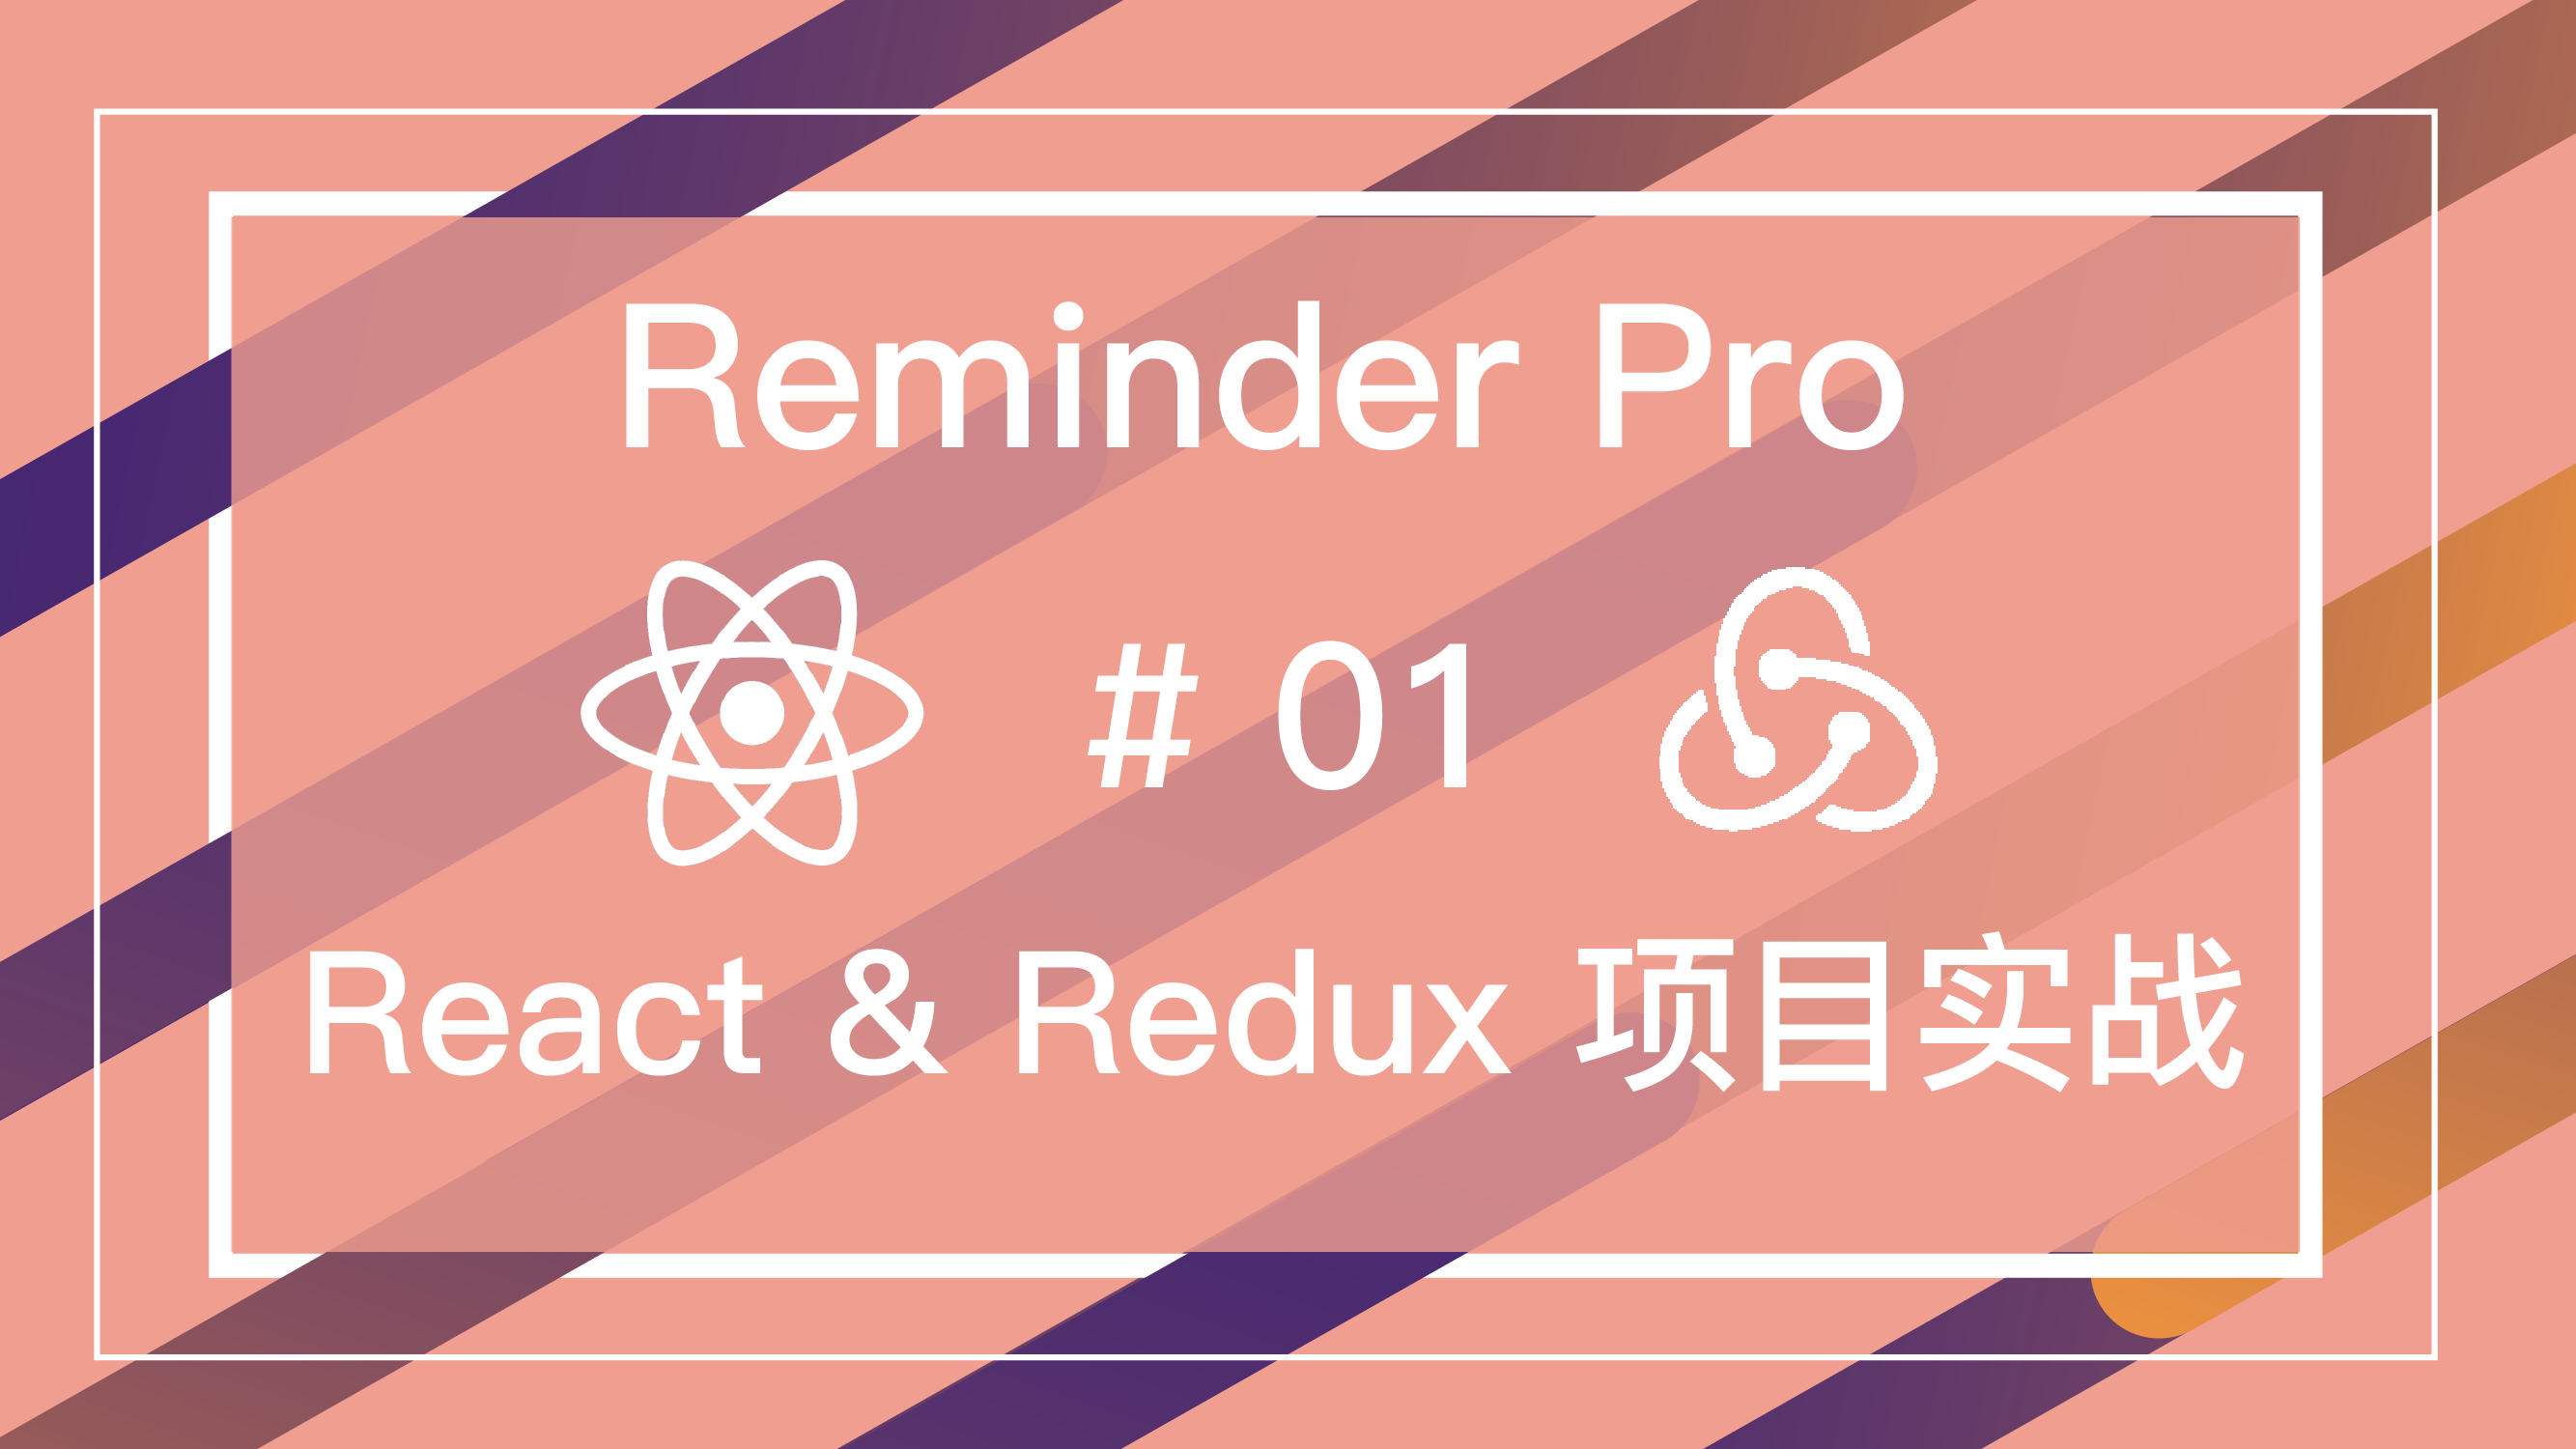 React & Redux 实战 Reminder Pro 项目免费视频教程 #1 项目免费视频教程搭建